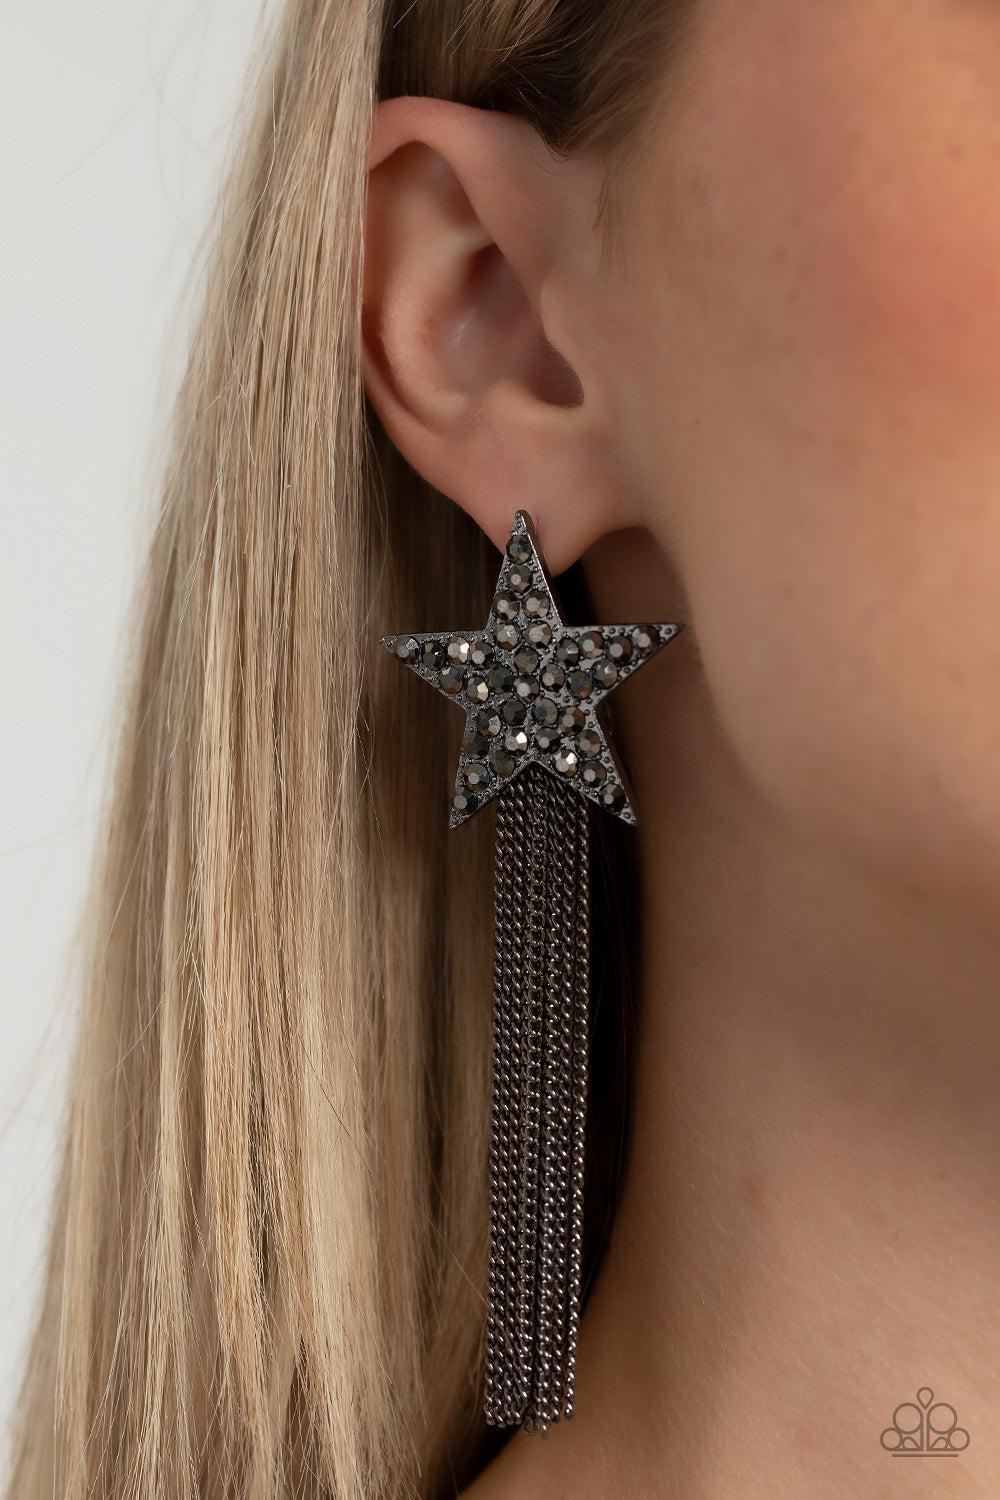 Superstar Solo Black &amp; Hematite Rhinestone Earrings - Paparazzi Accessories-on model - CarasShop.com - $5 Jewelry by Cara Jewels